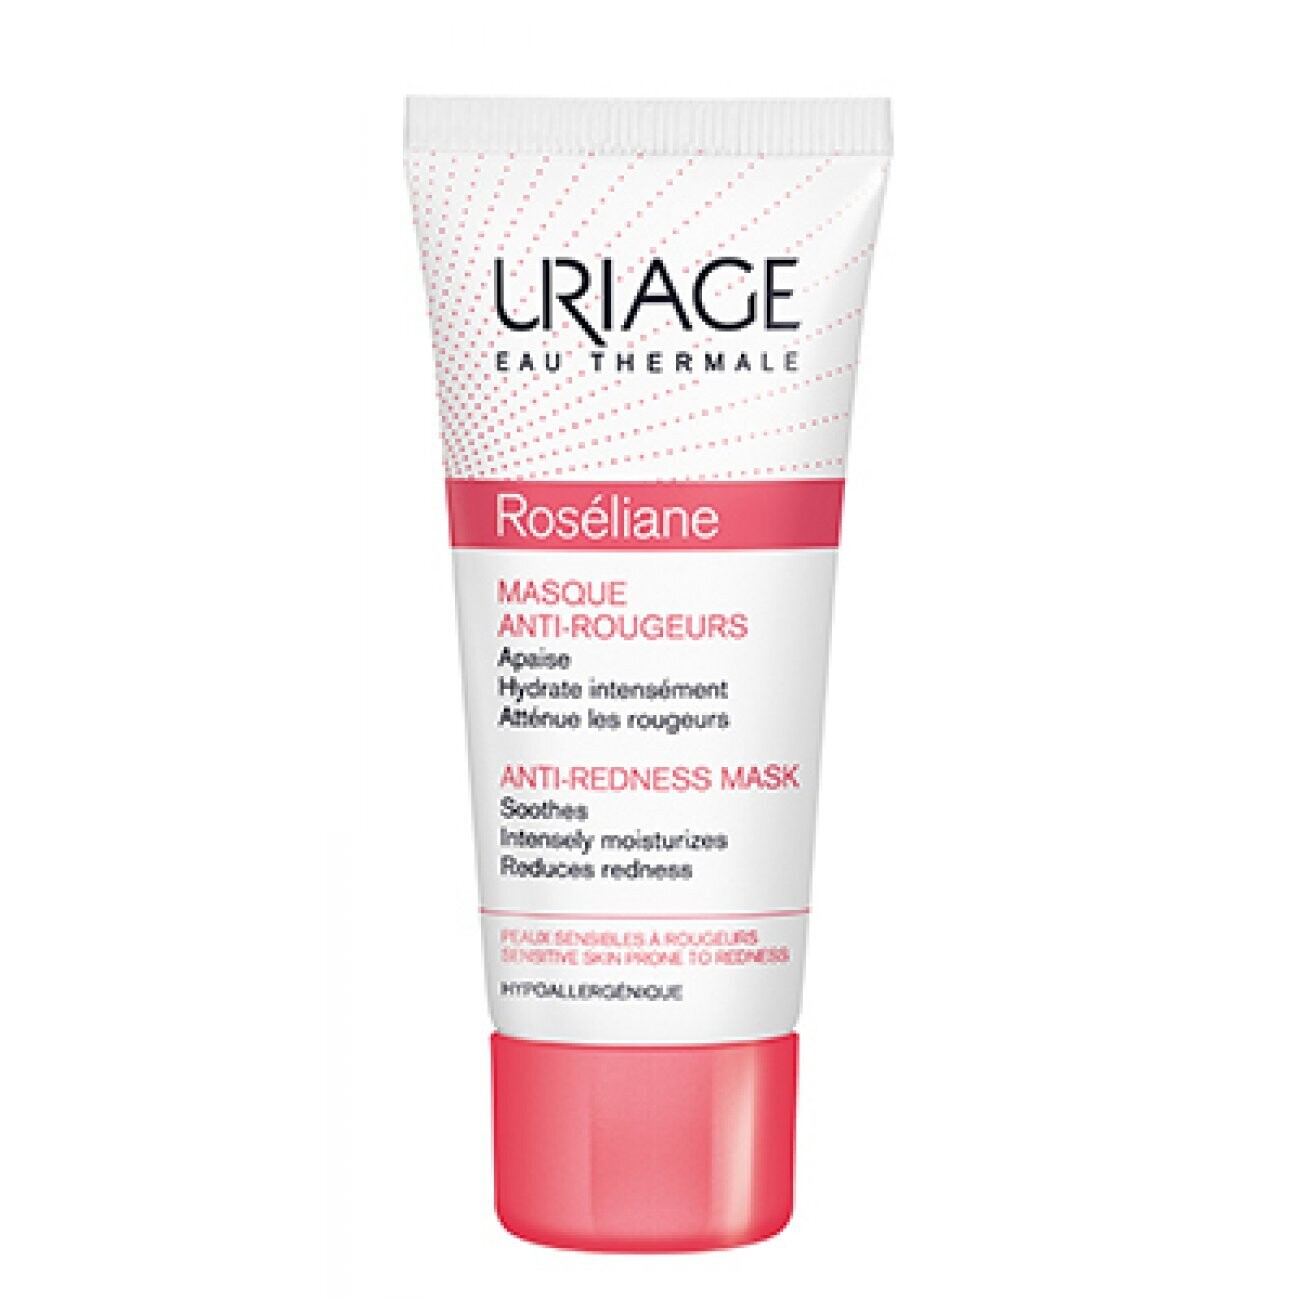 URIAGE - Roséliane Anti-Redness Mask - Sensitive Skin Prone to Redness